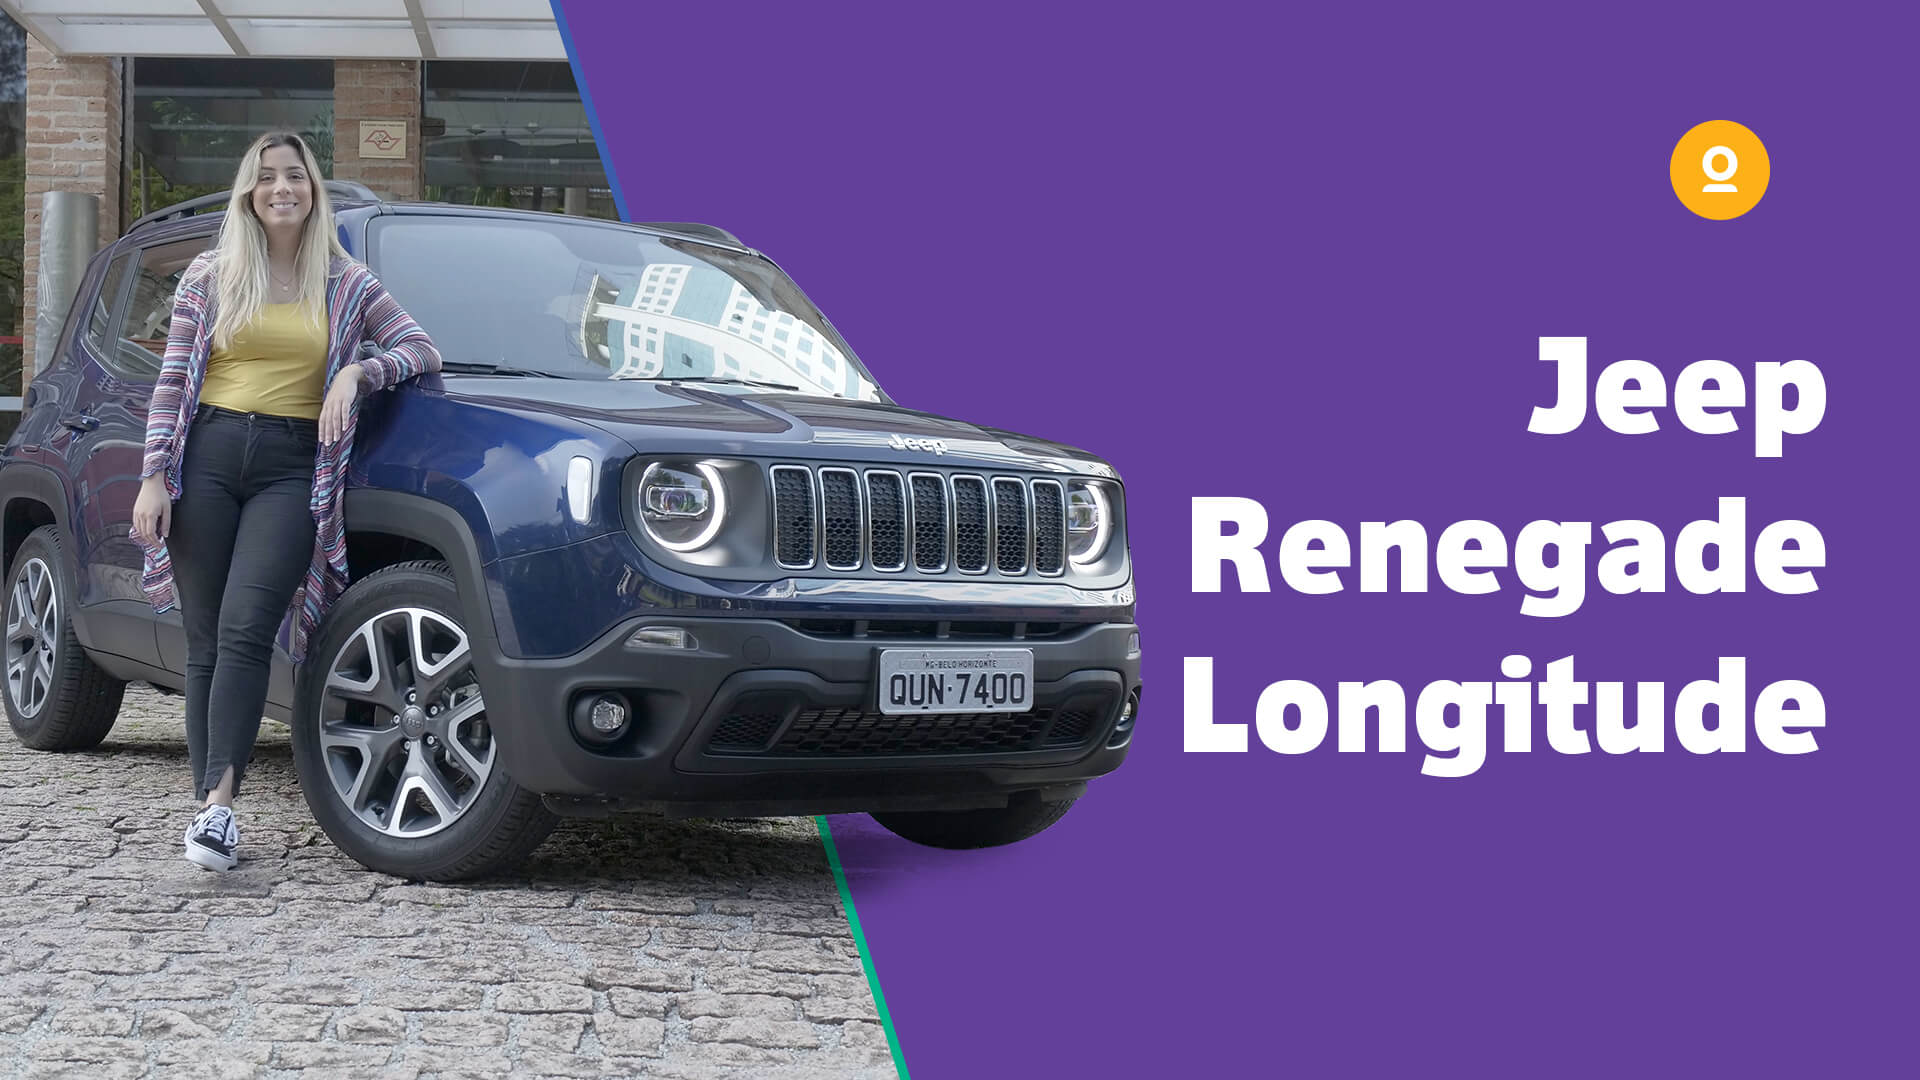 Seguro do Jeep Renegade: confira o preço